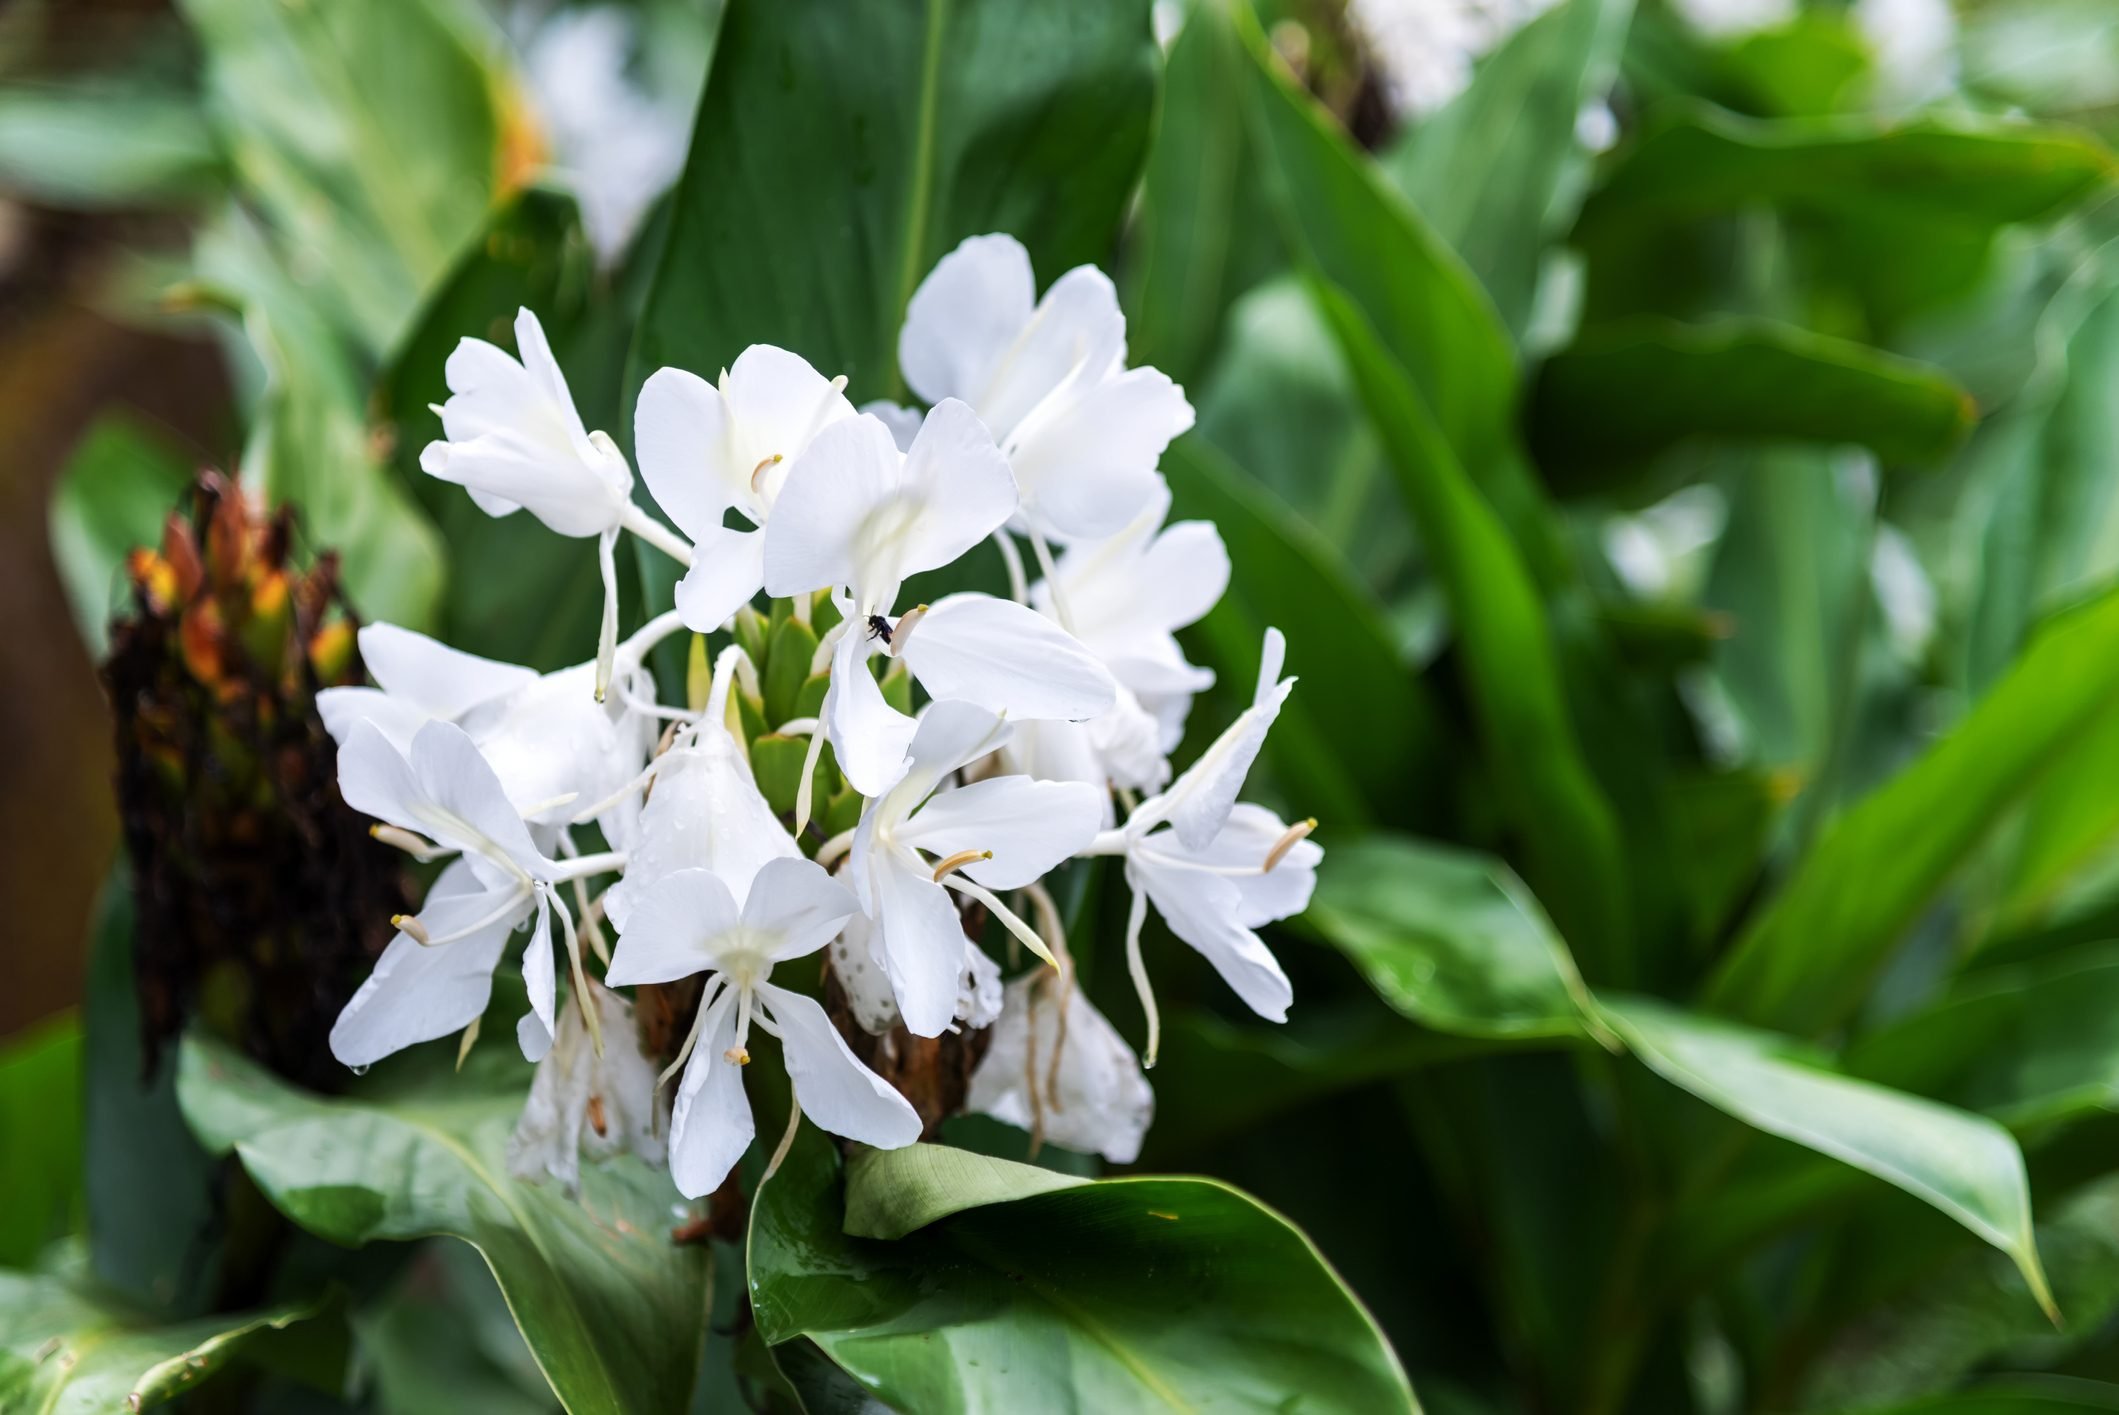 Cultivar lirio de jengibre tropical para flores de temporada tardía